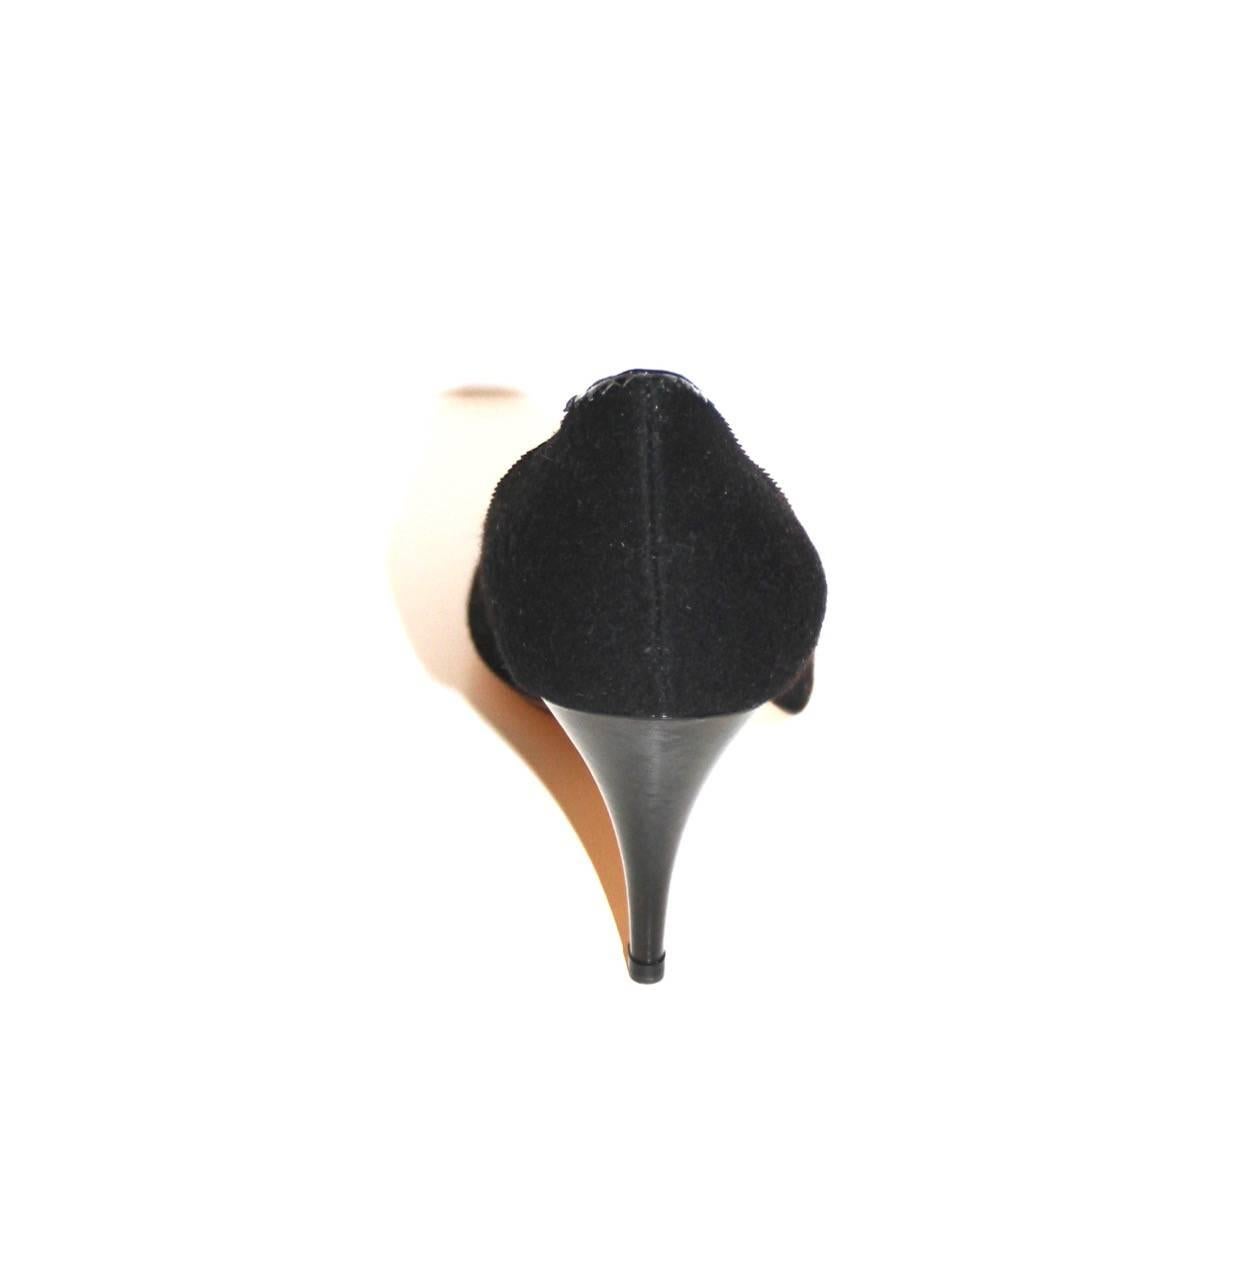 Charlotte Olympia Black Flannel Pumps Black Patent Leather Heel - Pristine Cond. 1